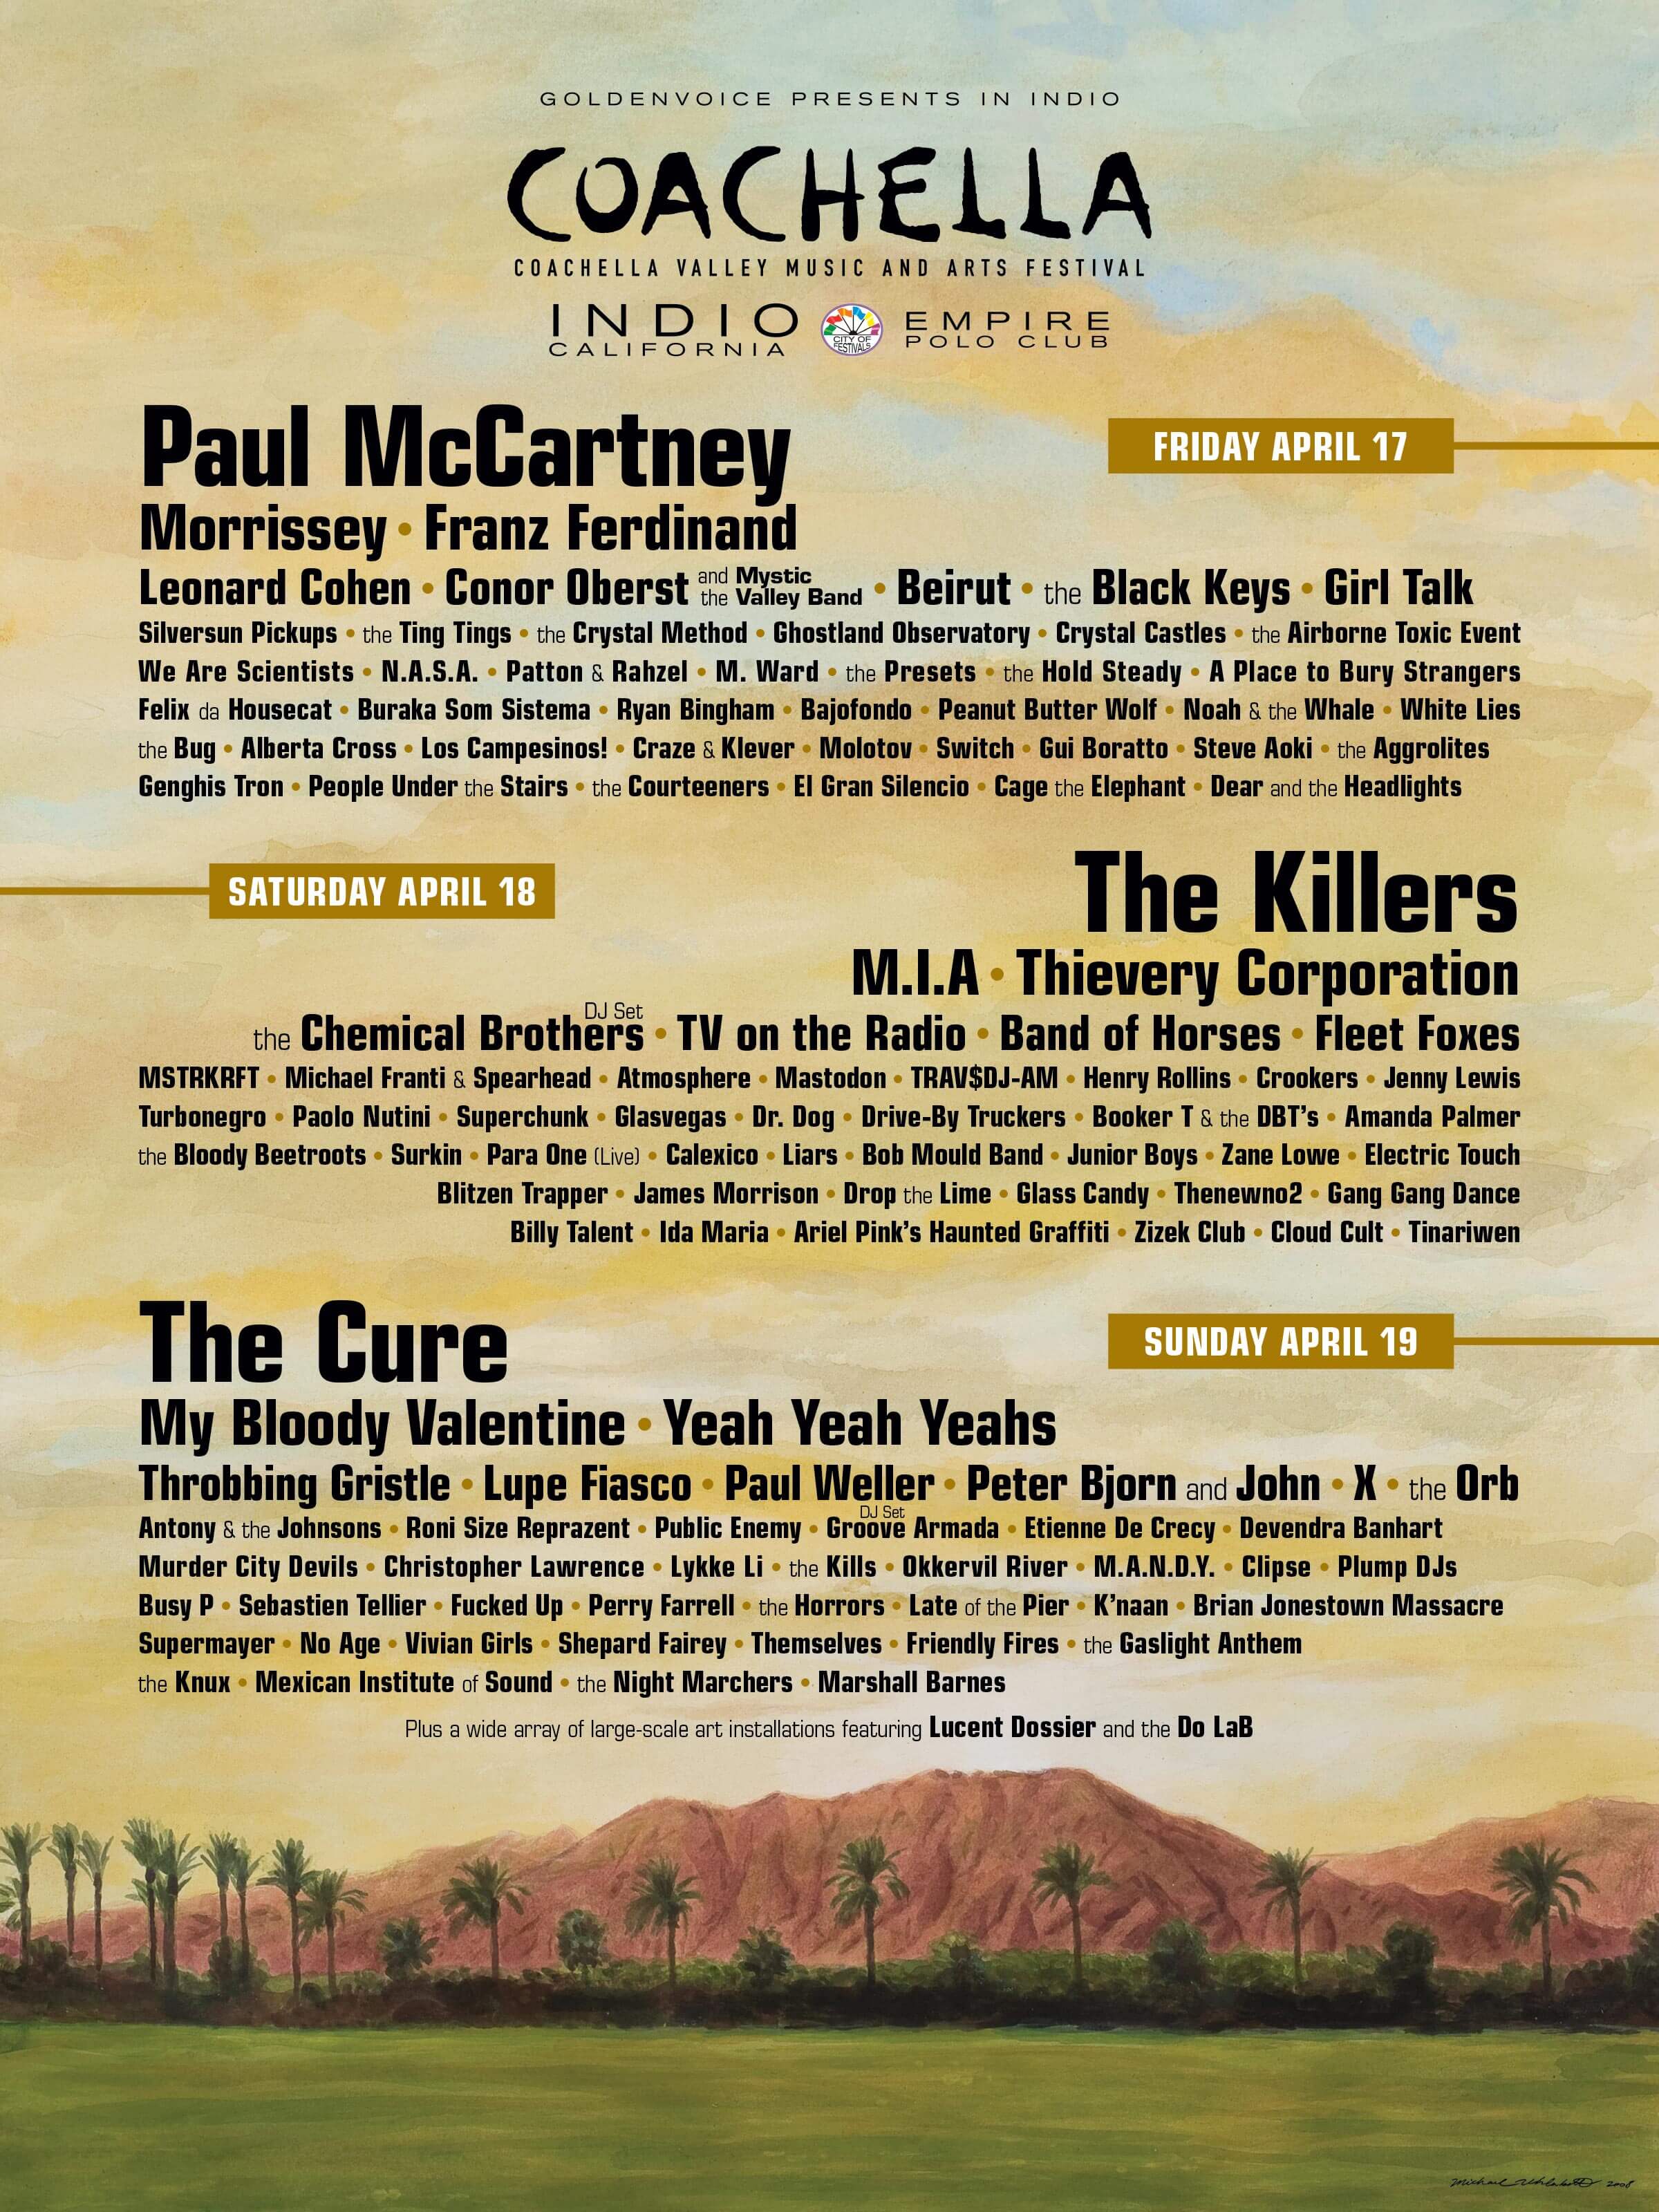 Coachella 2009 Lineup Poster